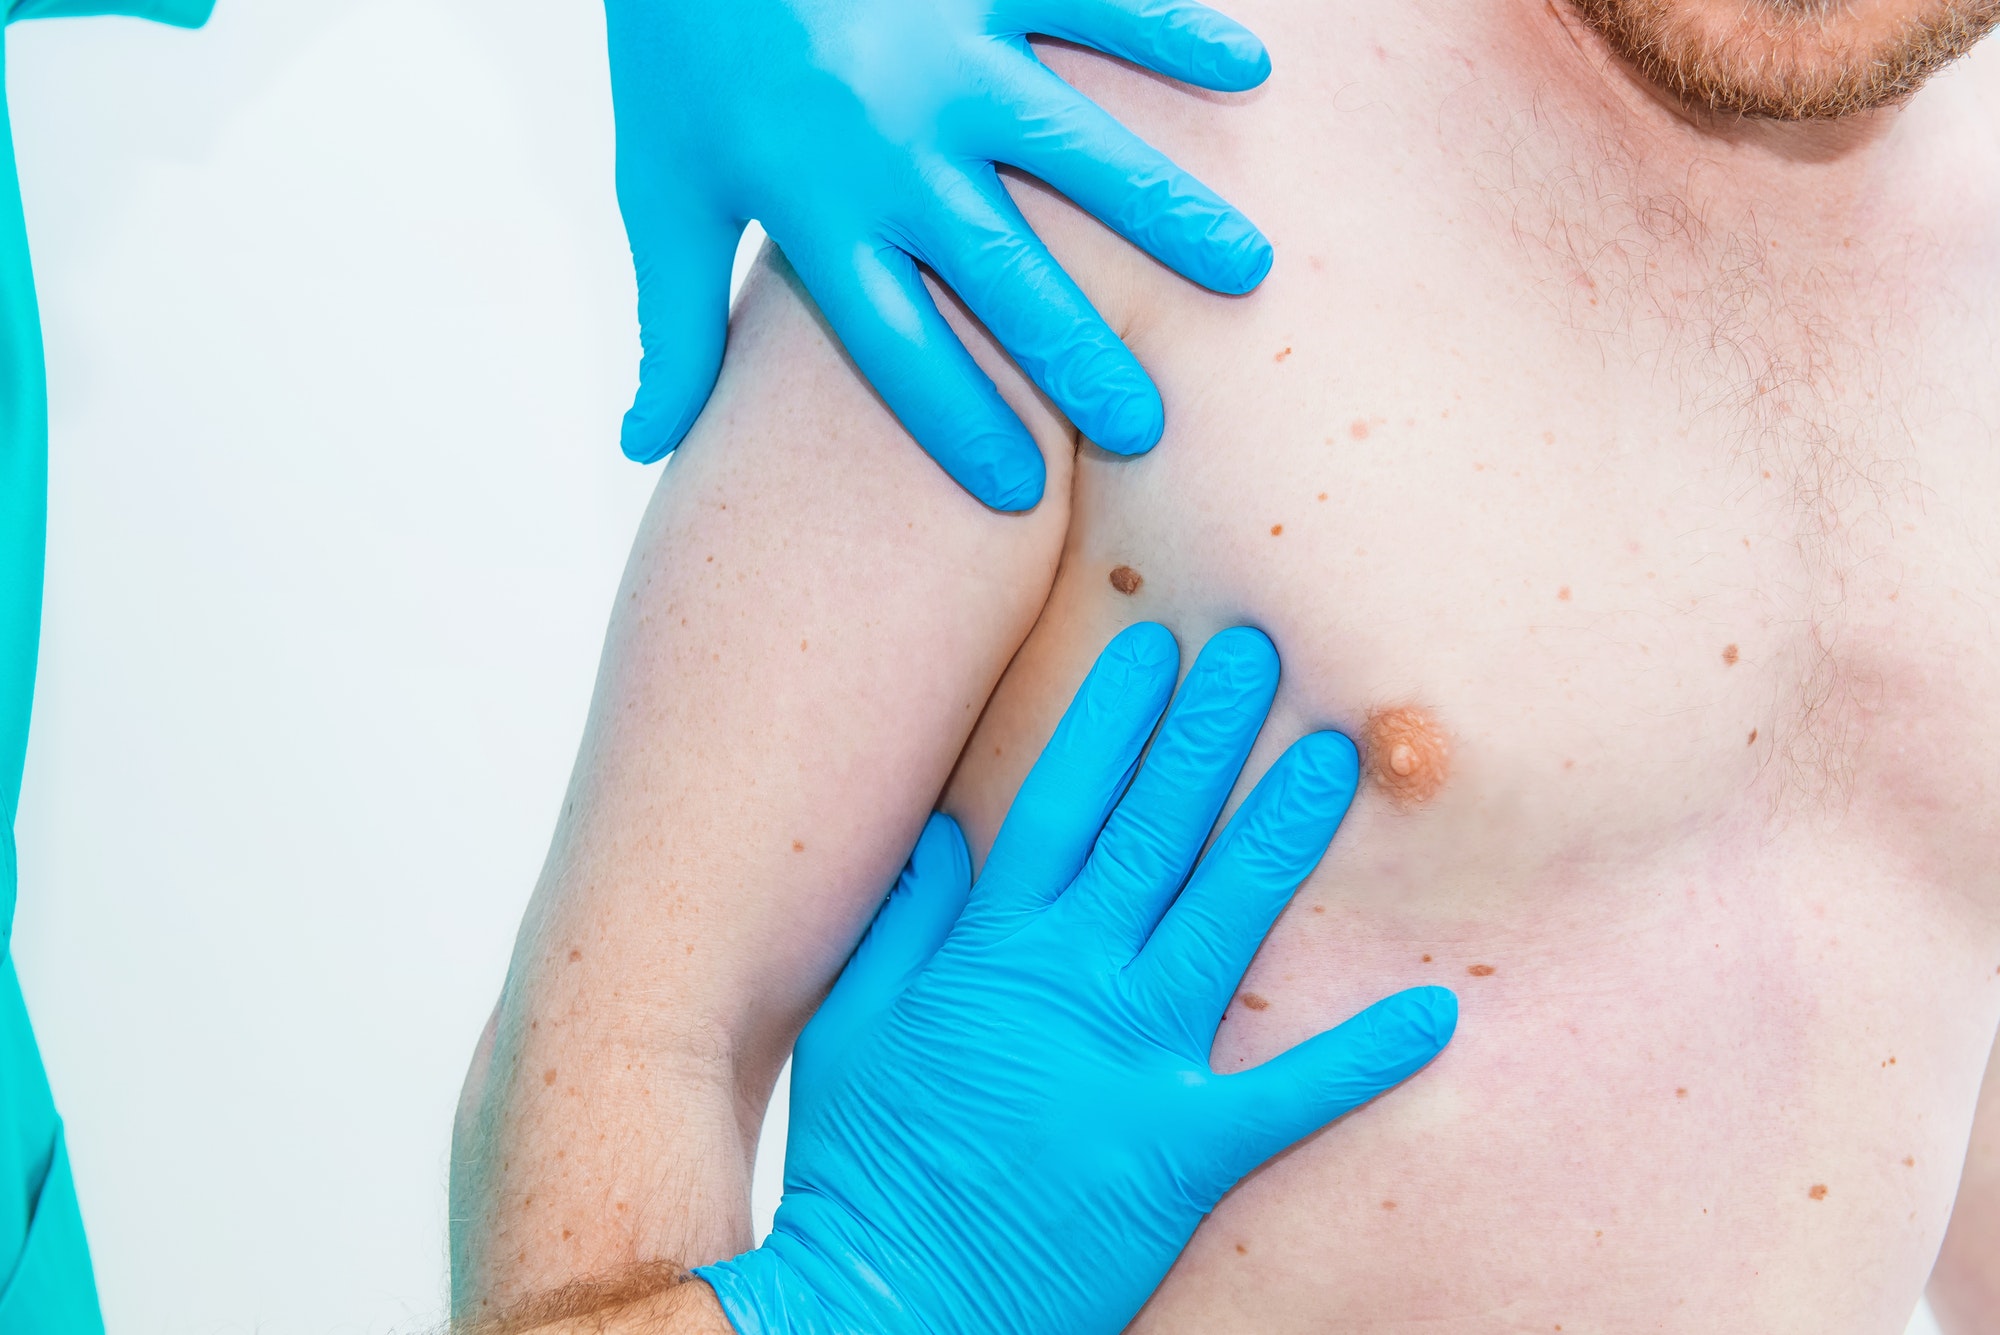 Doctor dermatologist hands in gloves examine underarm birthmark of male patient in clinic.